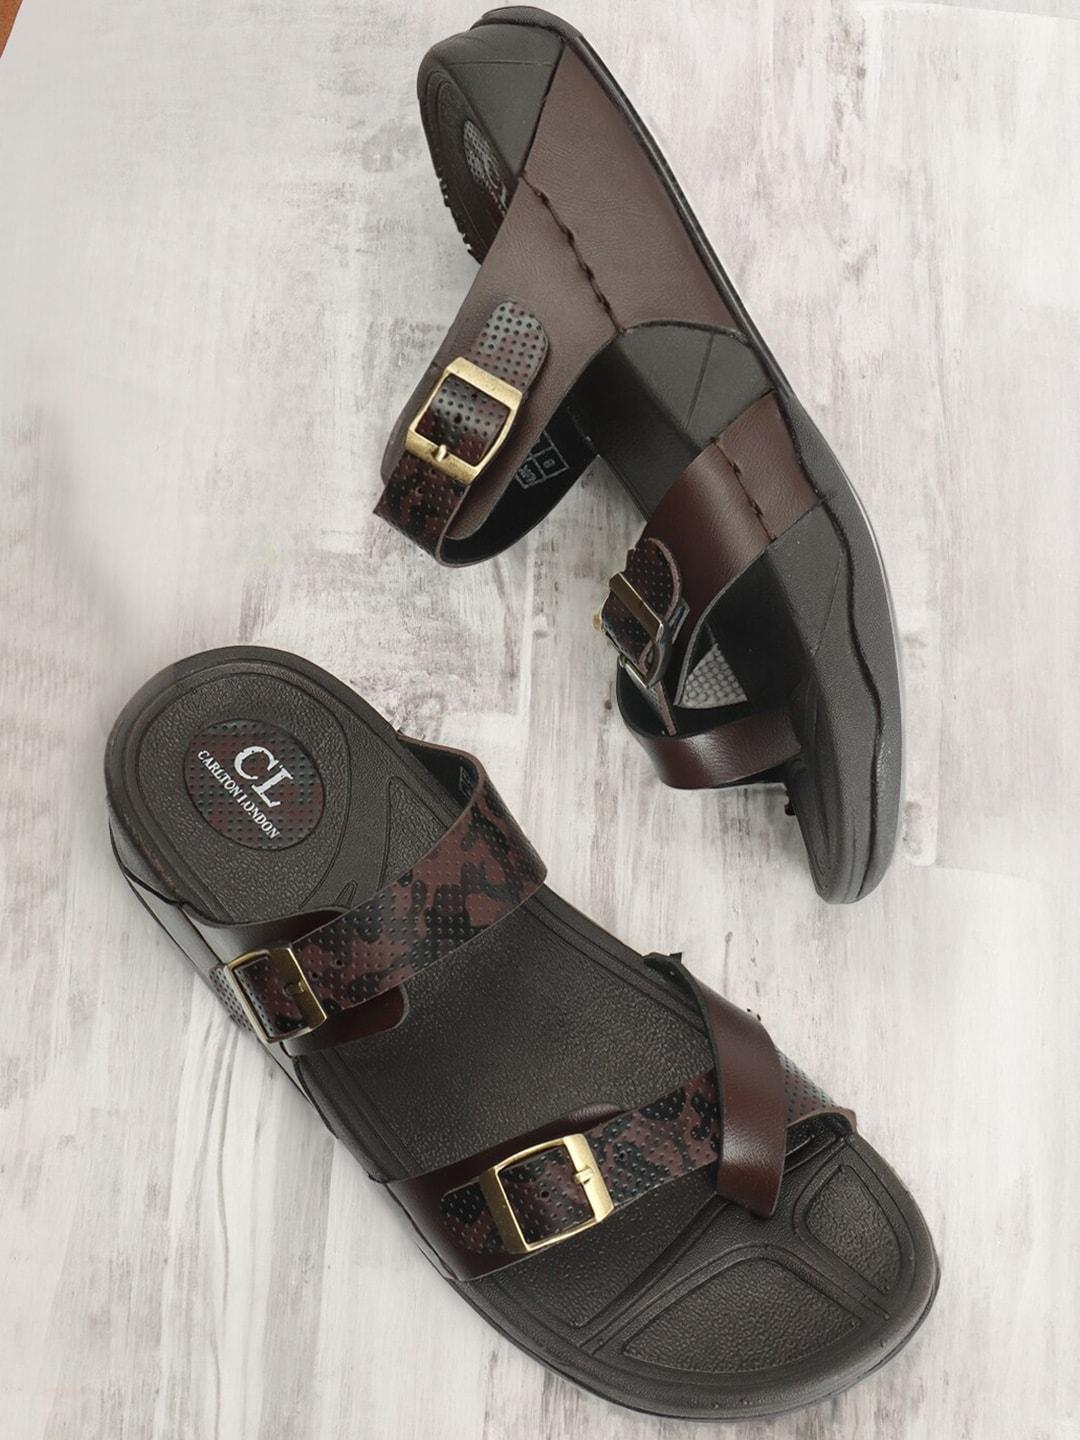 carlton-london-printed-buckle-detailed-open-toe-comfort-sandals